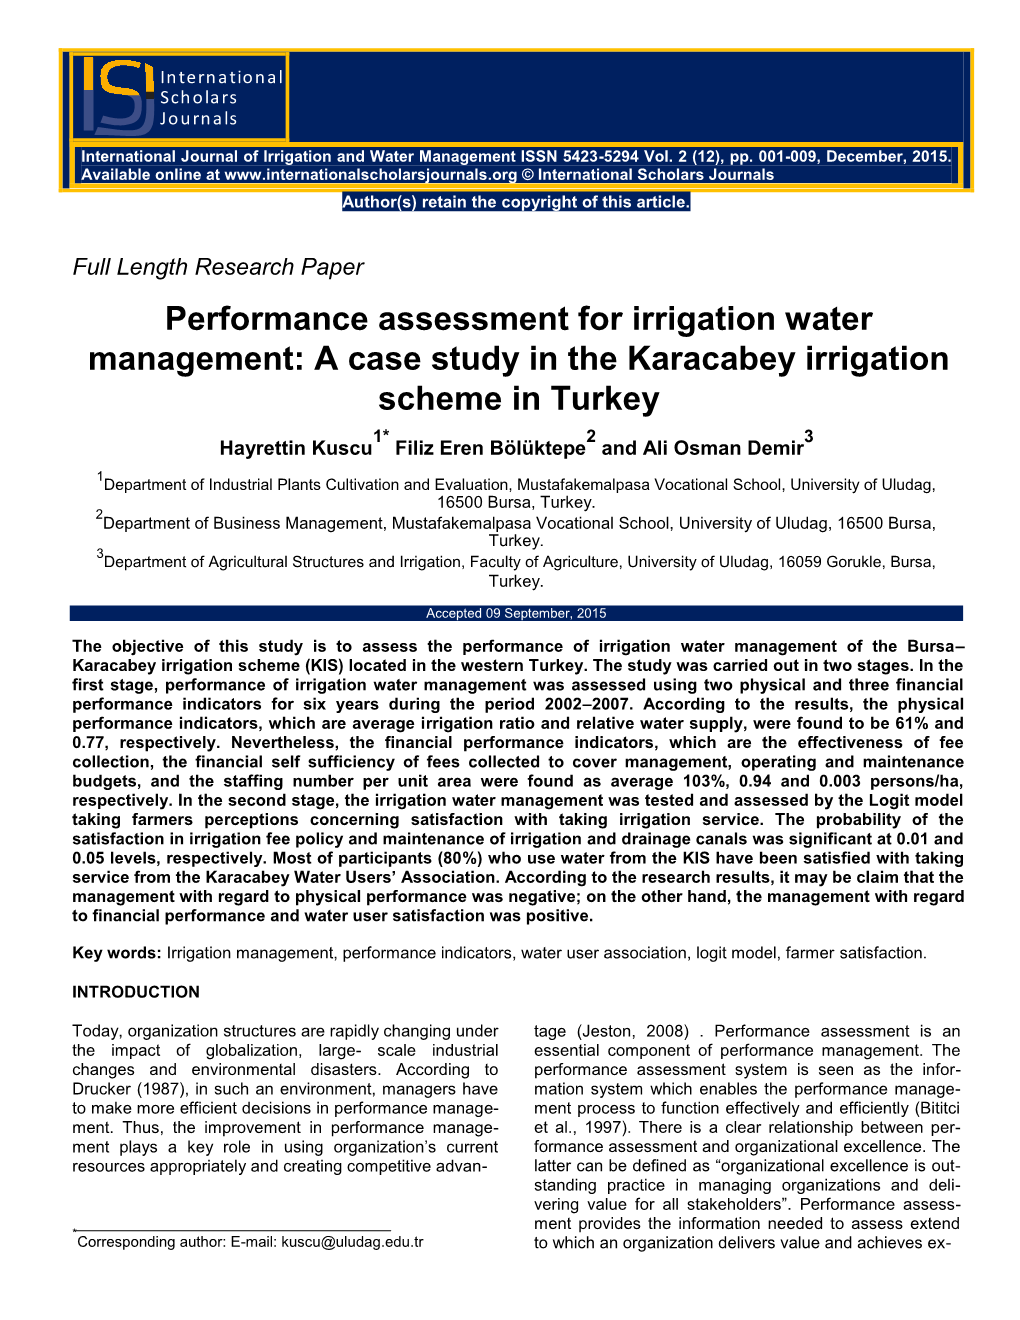 Performance Assessment for Irrigation Water Management: a Case Study in the Karacabey Irrigation Scheme in Turkey